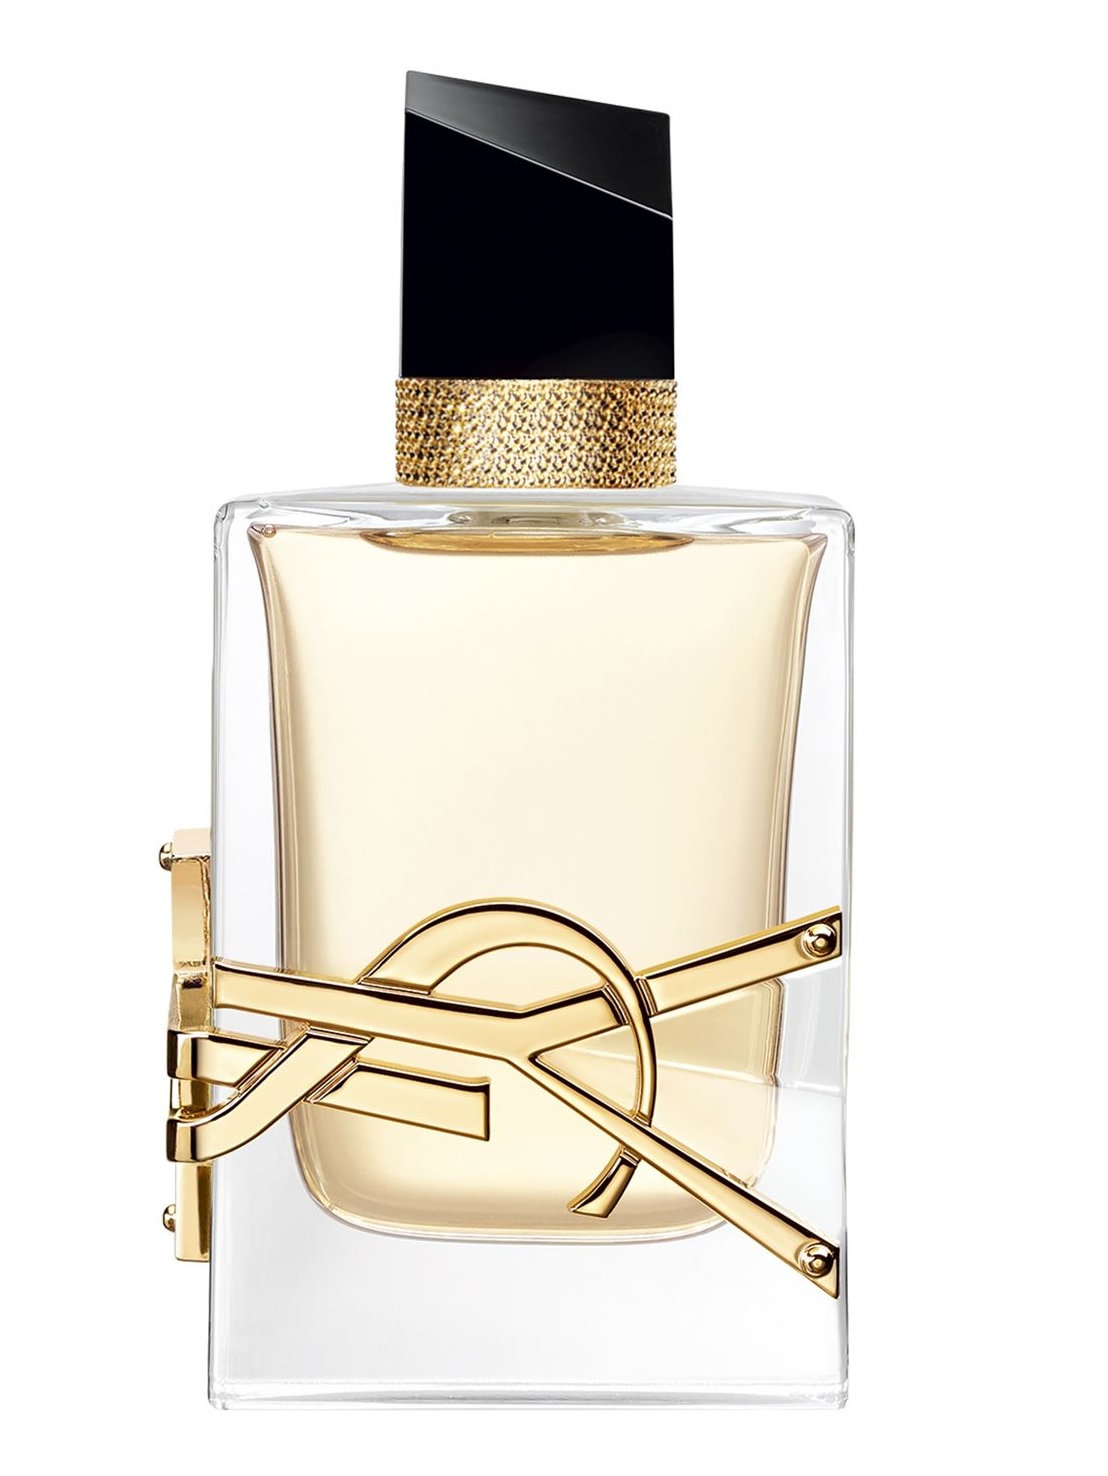 Libre Yves Saint Laurent perfume a fragrance for women 2019